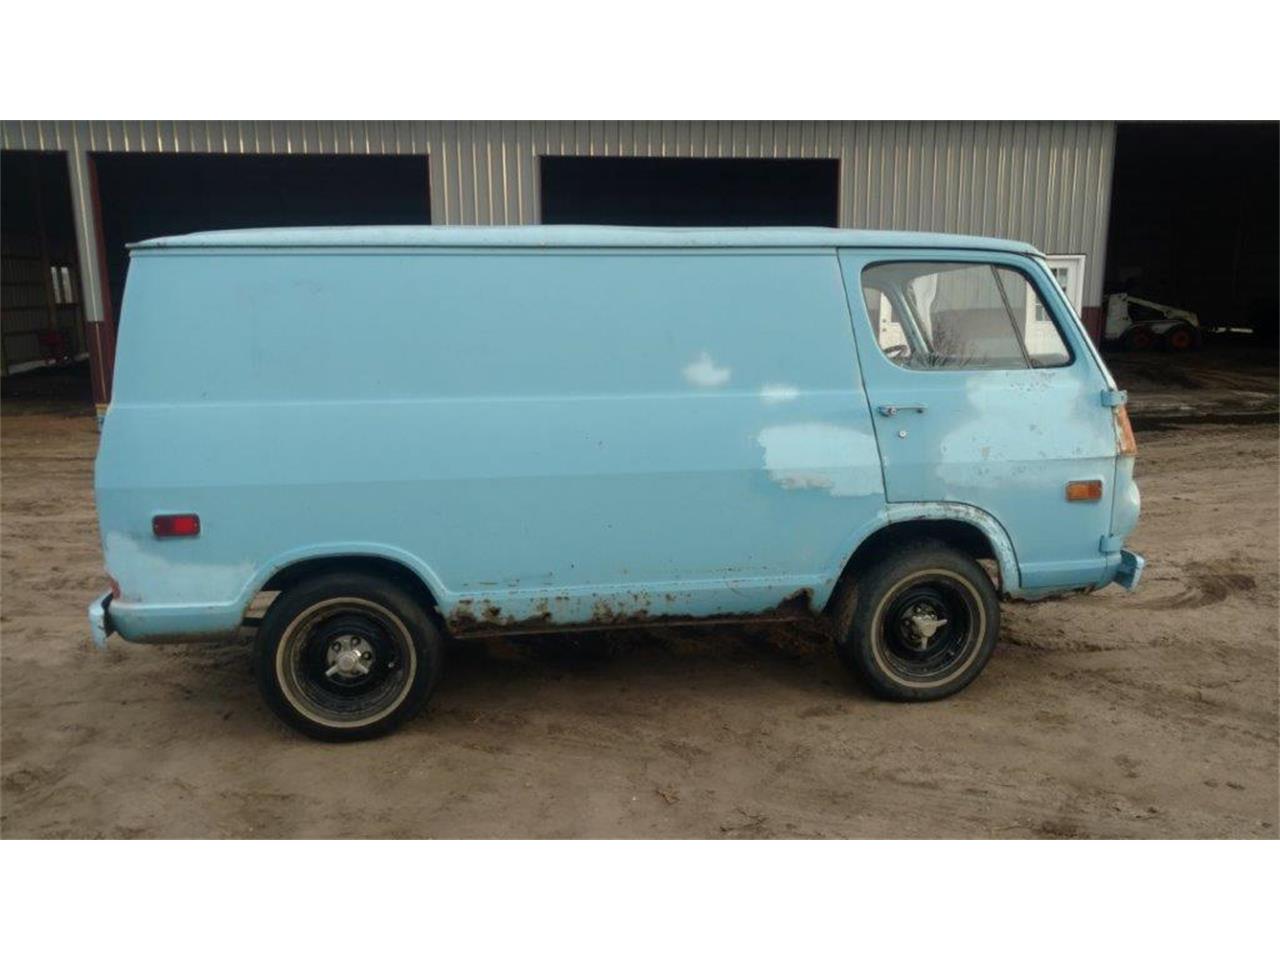 1969 chevy van for sale craigslist